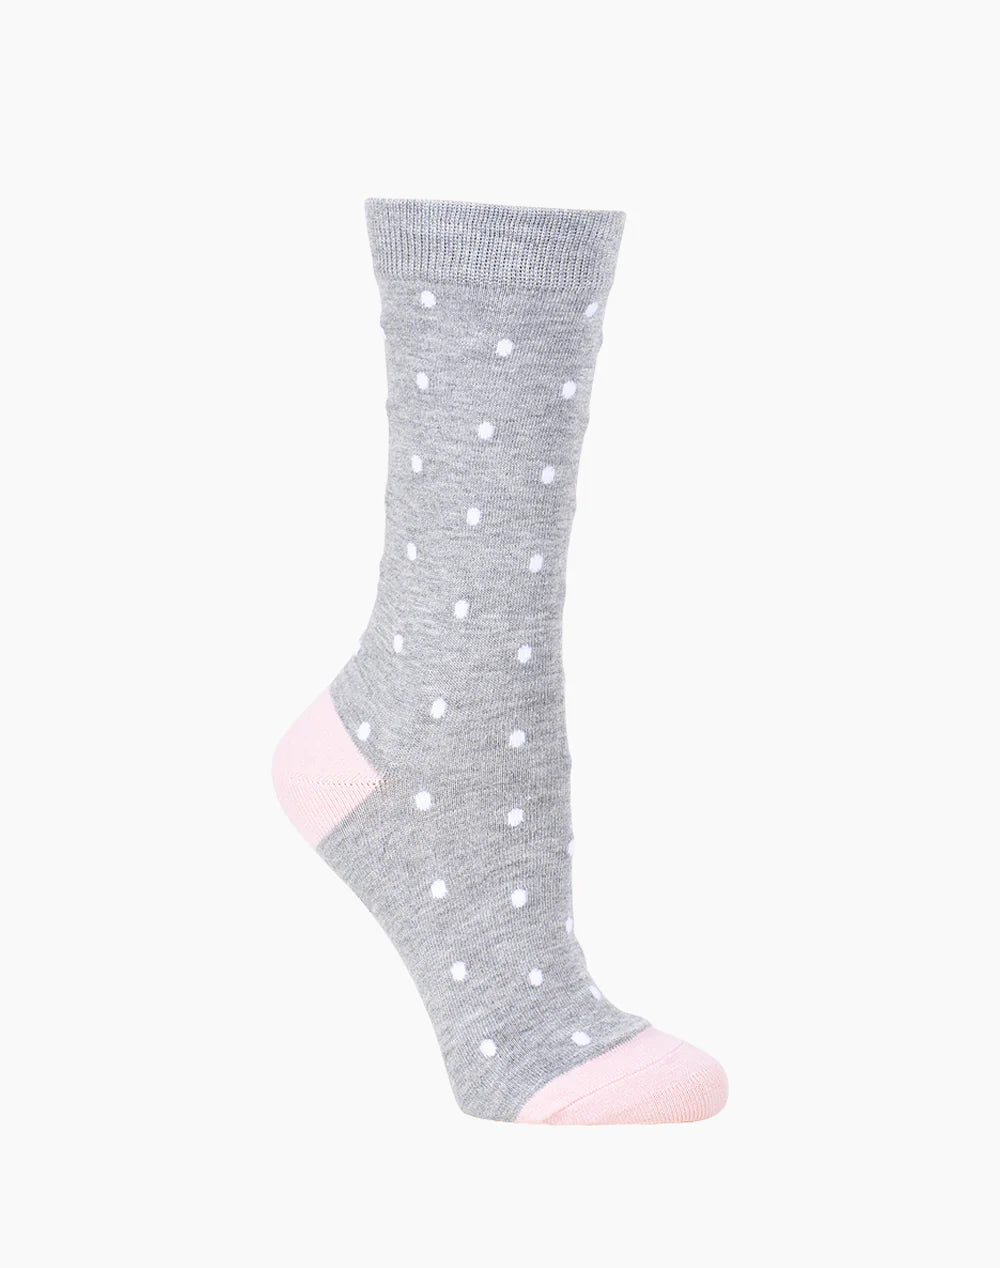 Dots on Grey Women's Bamboo Crew Socks - The Sockery